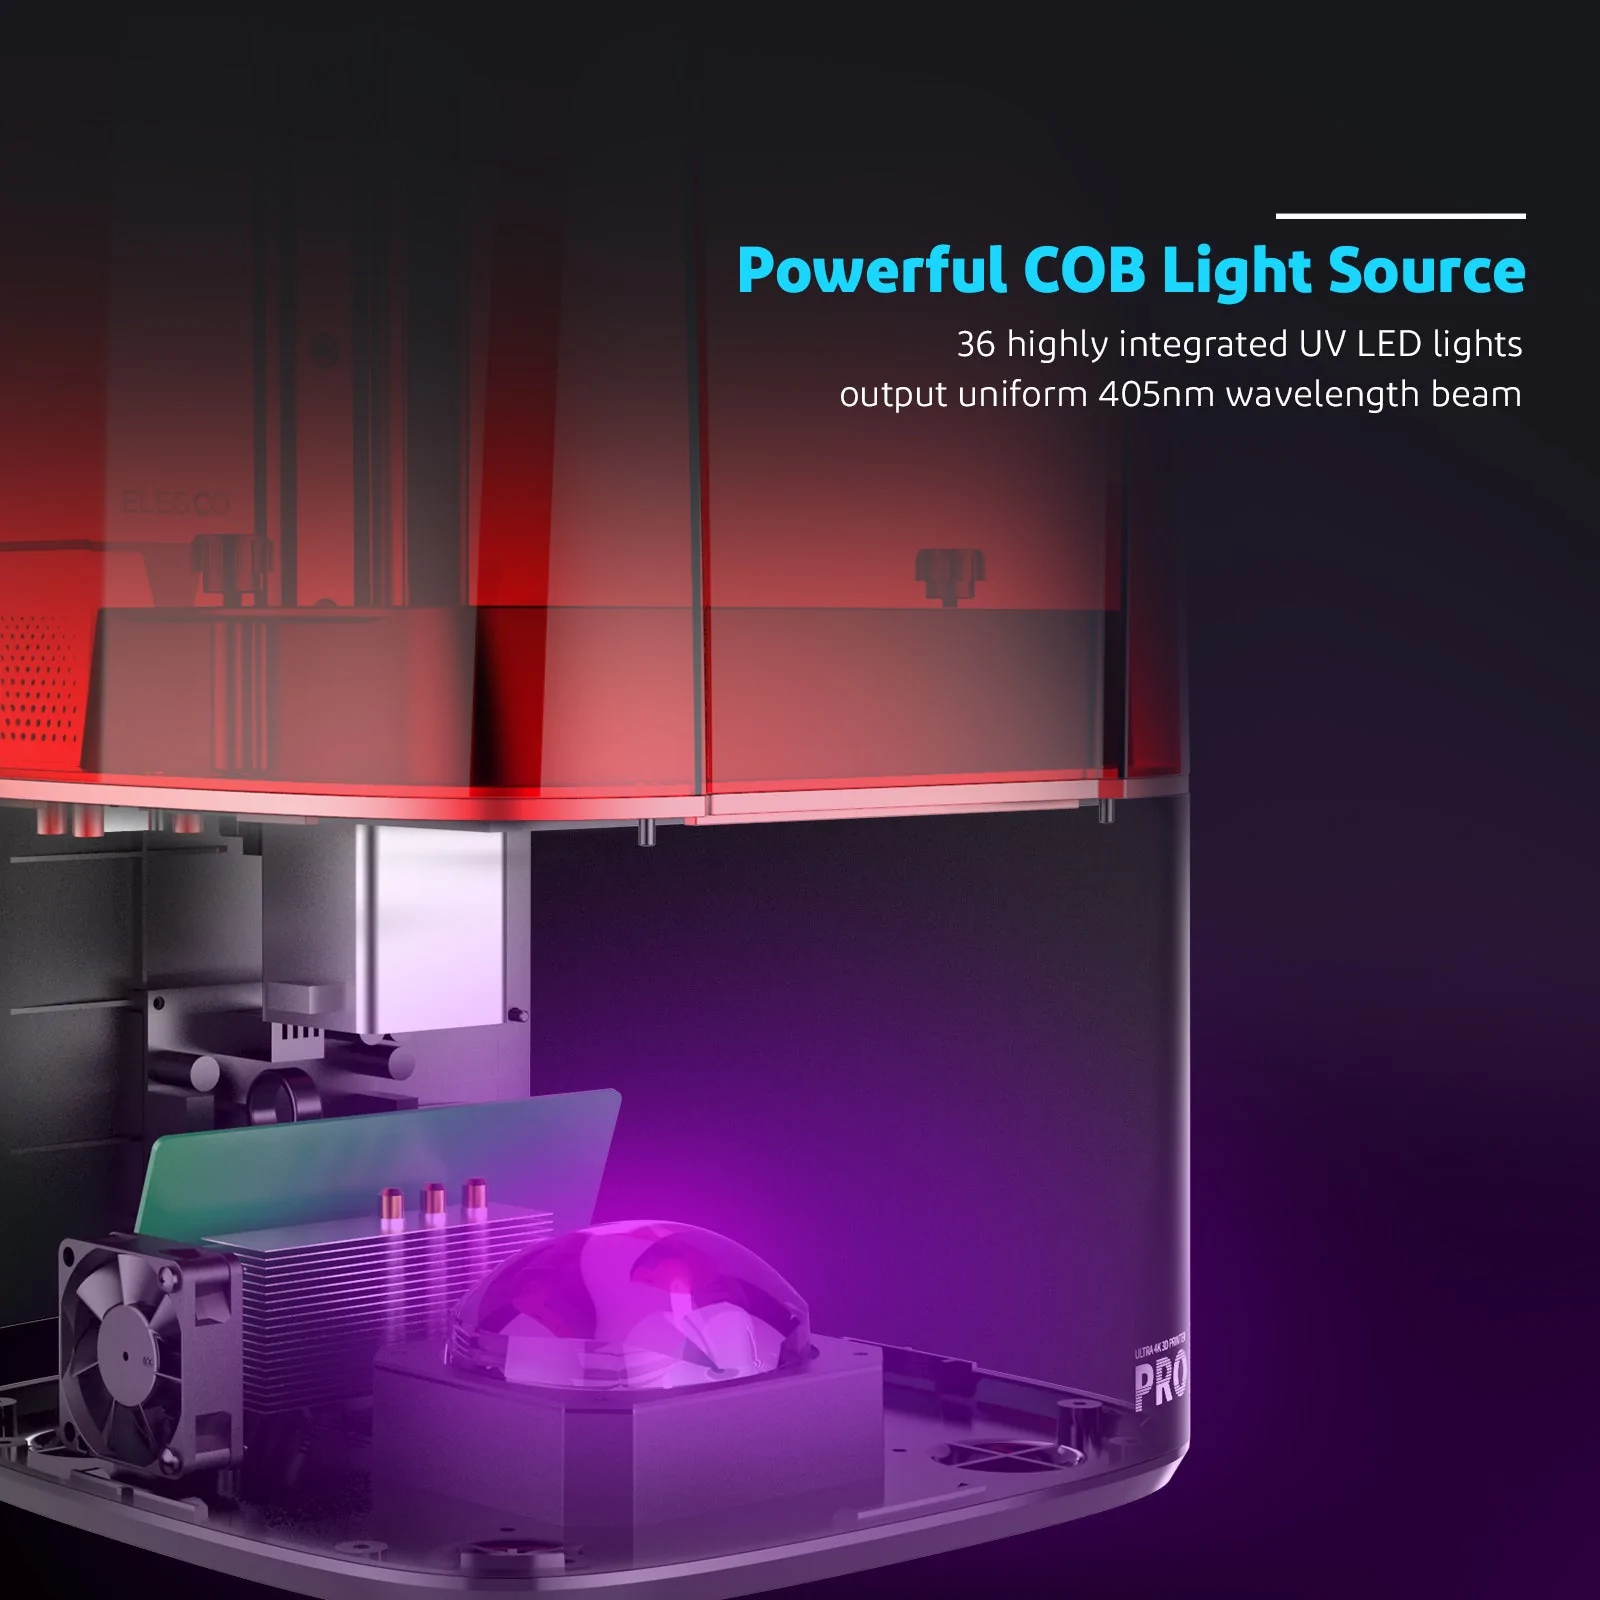 Elegoo Mars 3 Pro comes with Powerful COB Light Source